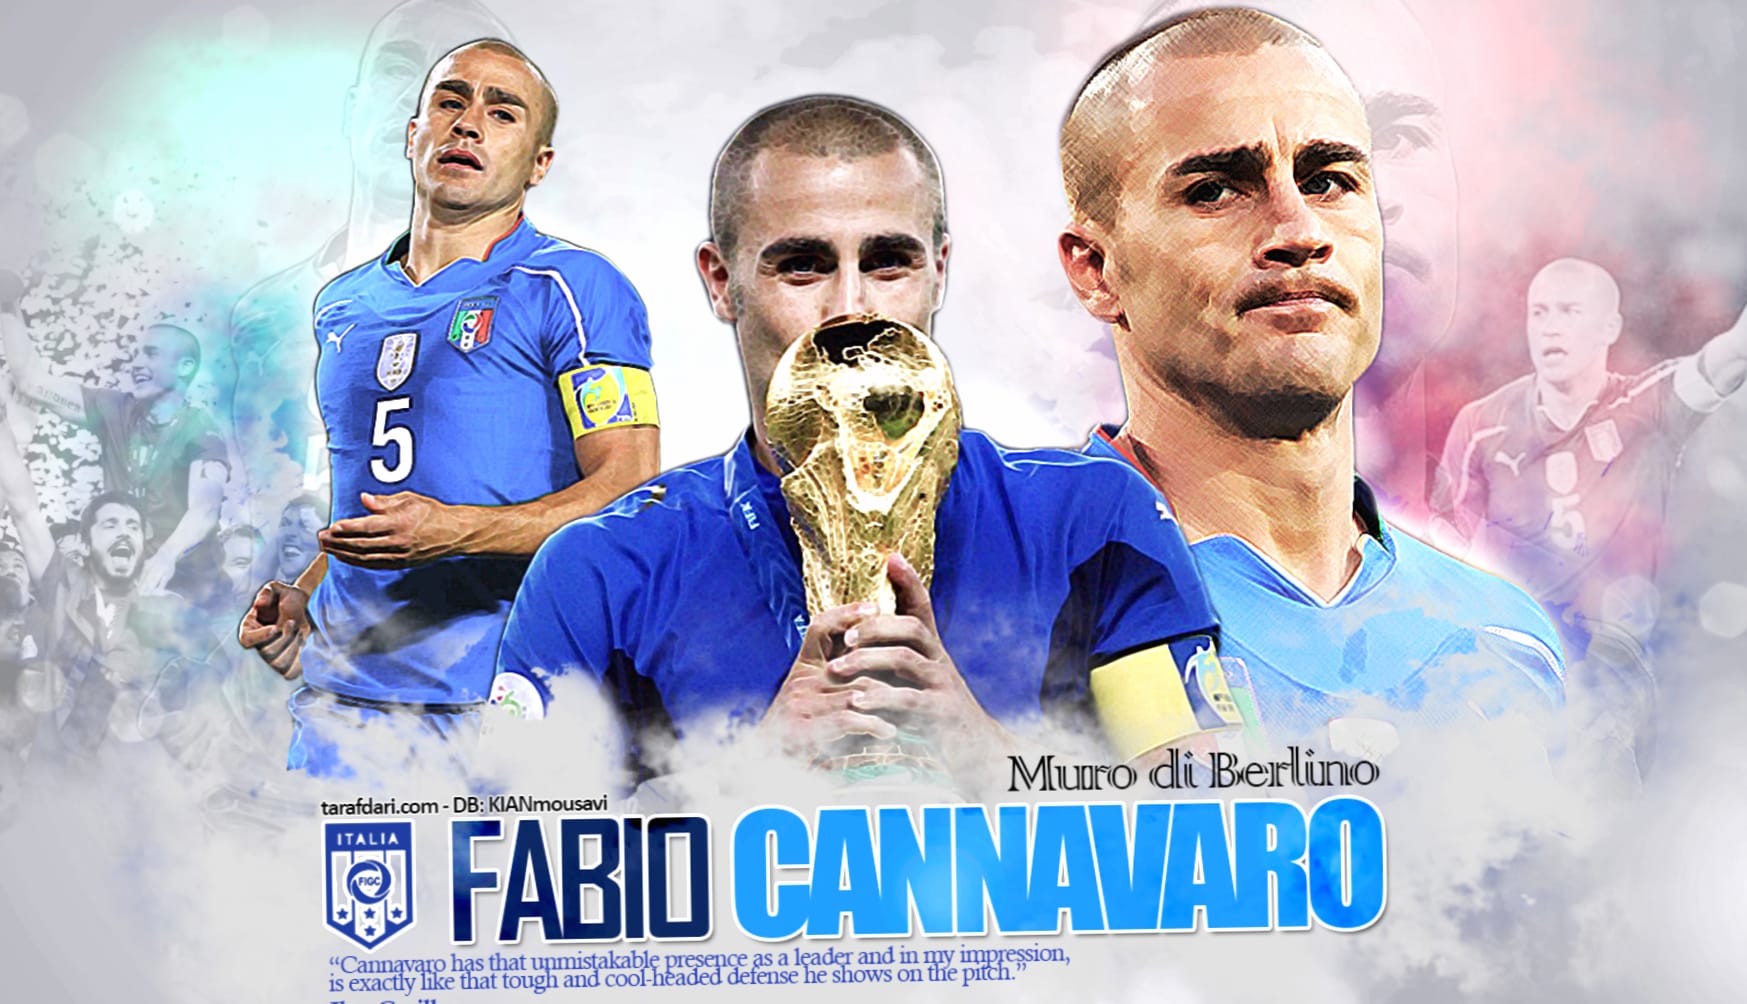 Fabio Cannavaro at 2048 x 2048 iPad size wallpapers HD quality